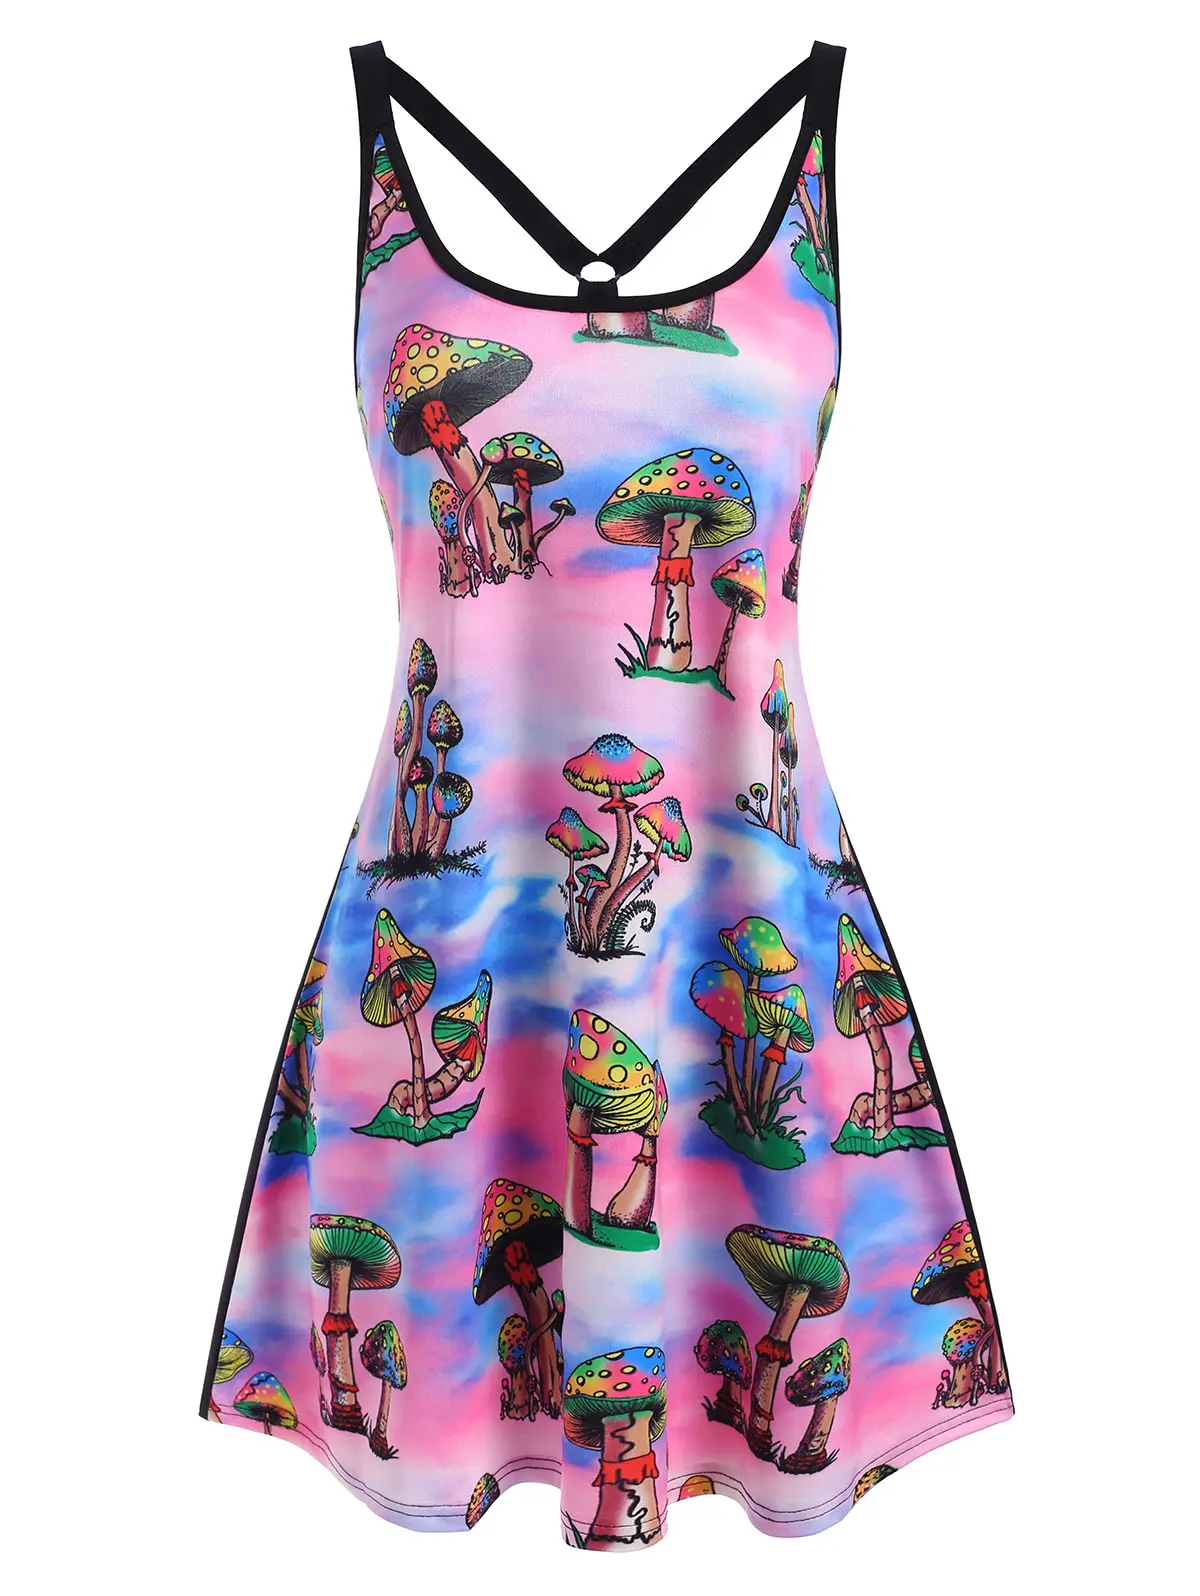 

Wipalo Casual Sleeveless Summer Dress Women Mushroom Print Strappy O Ring Tank Dress Retro Mini A Line Dress Fashion Loose Femme